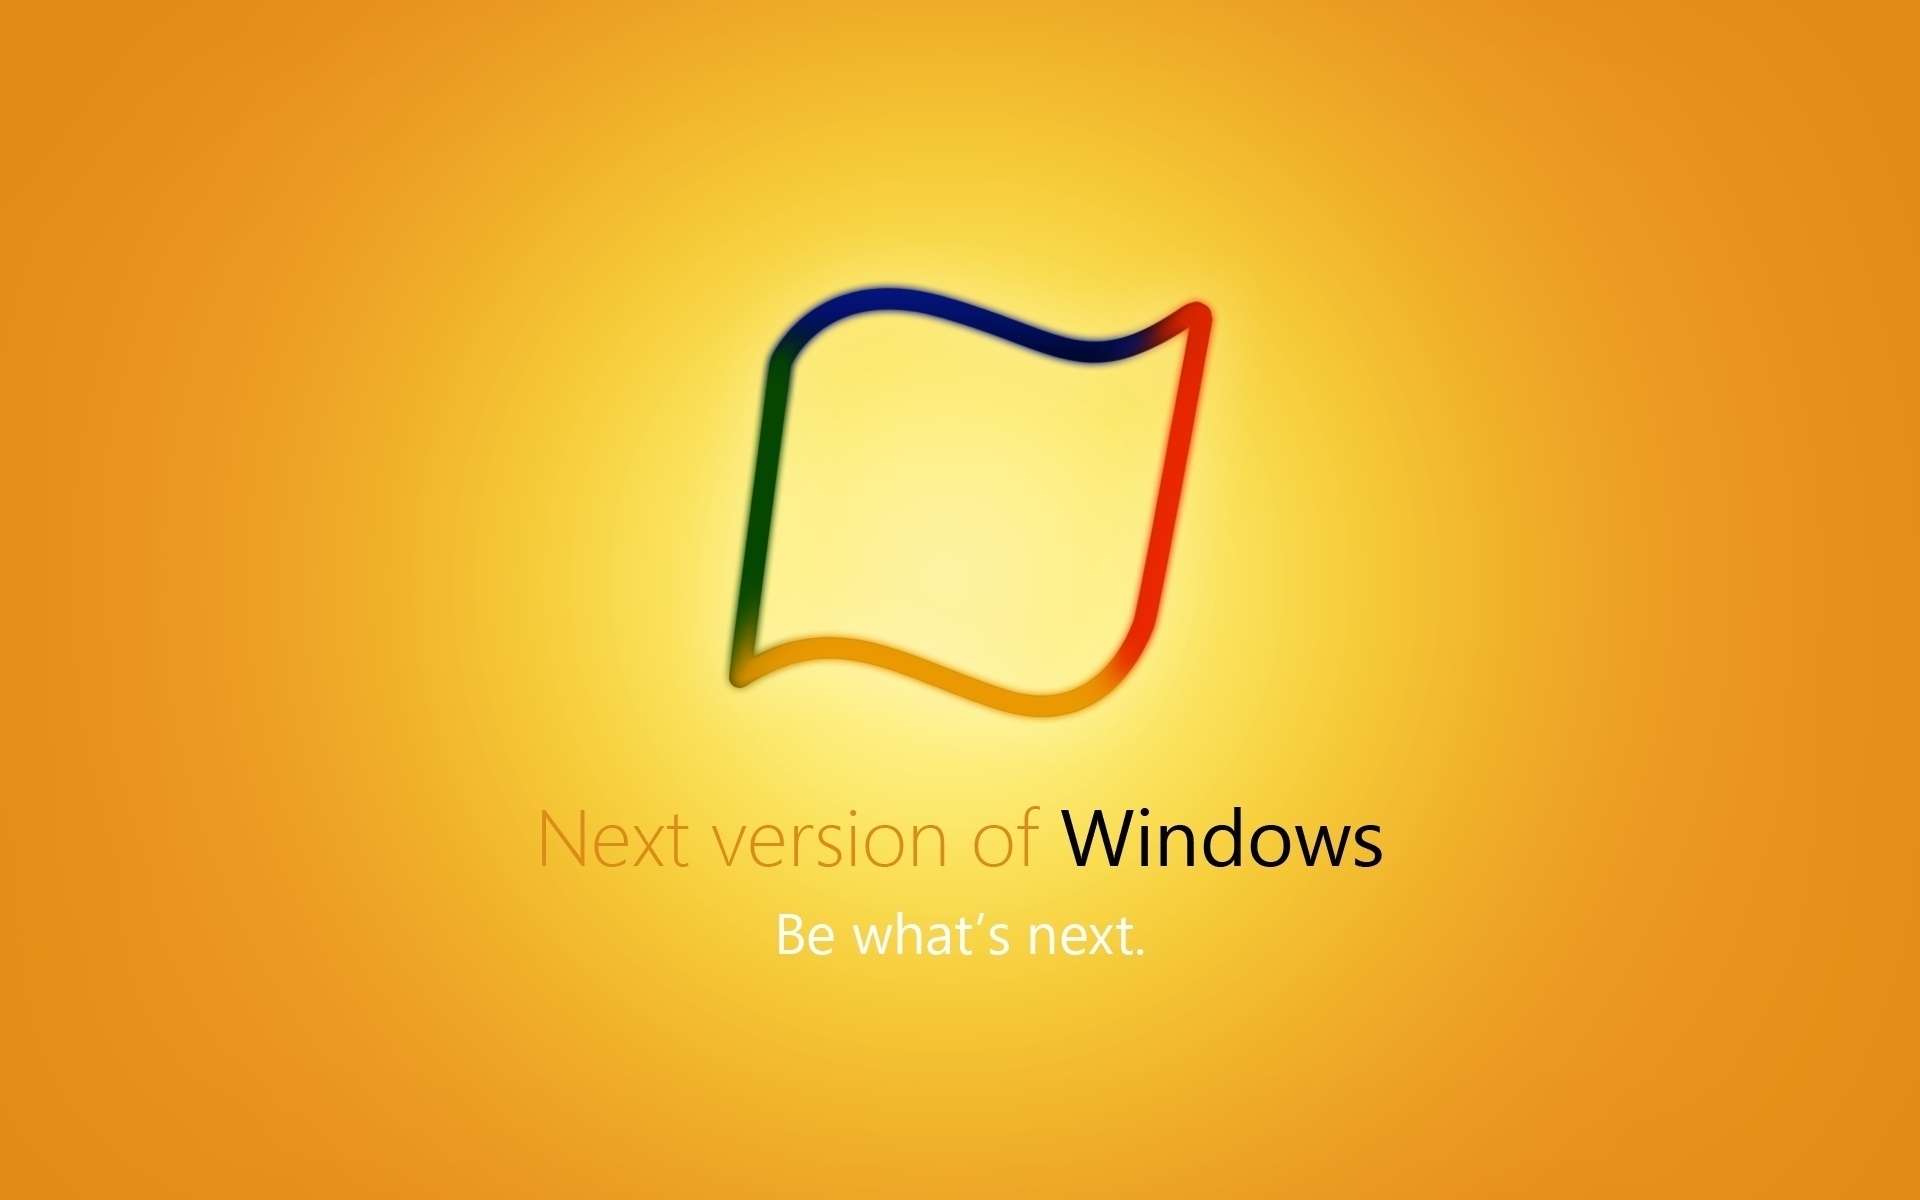 Next Windows 8 for 1920 x 1200 widescreen resolution